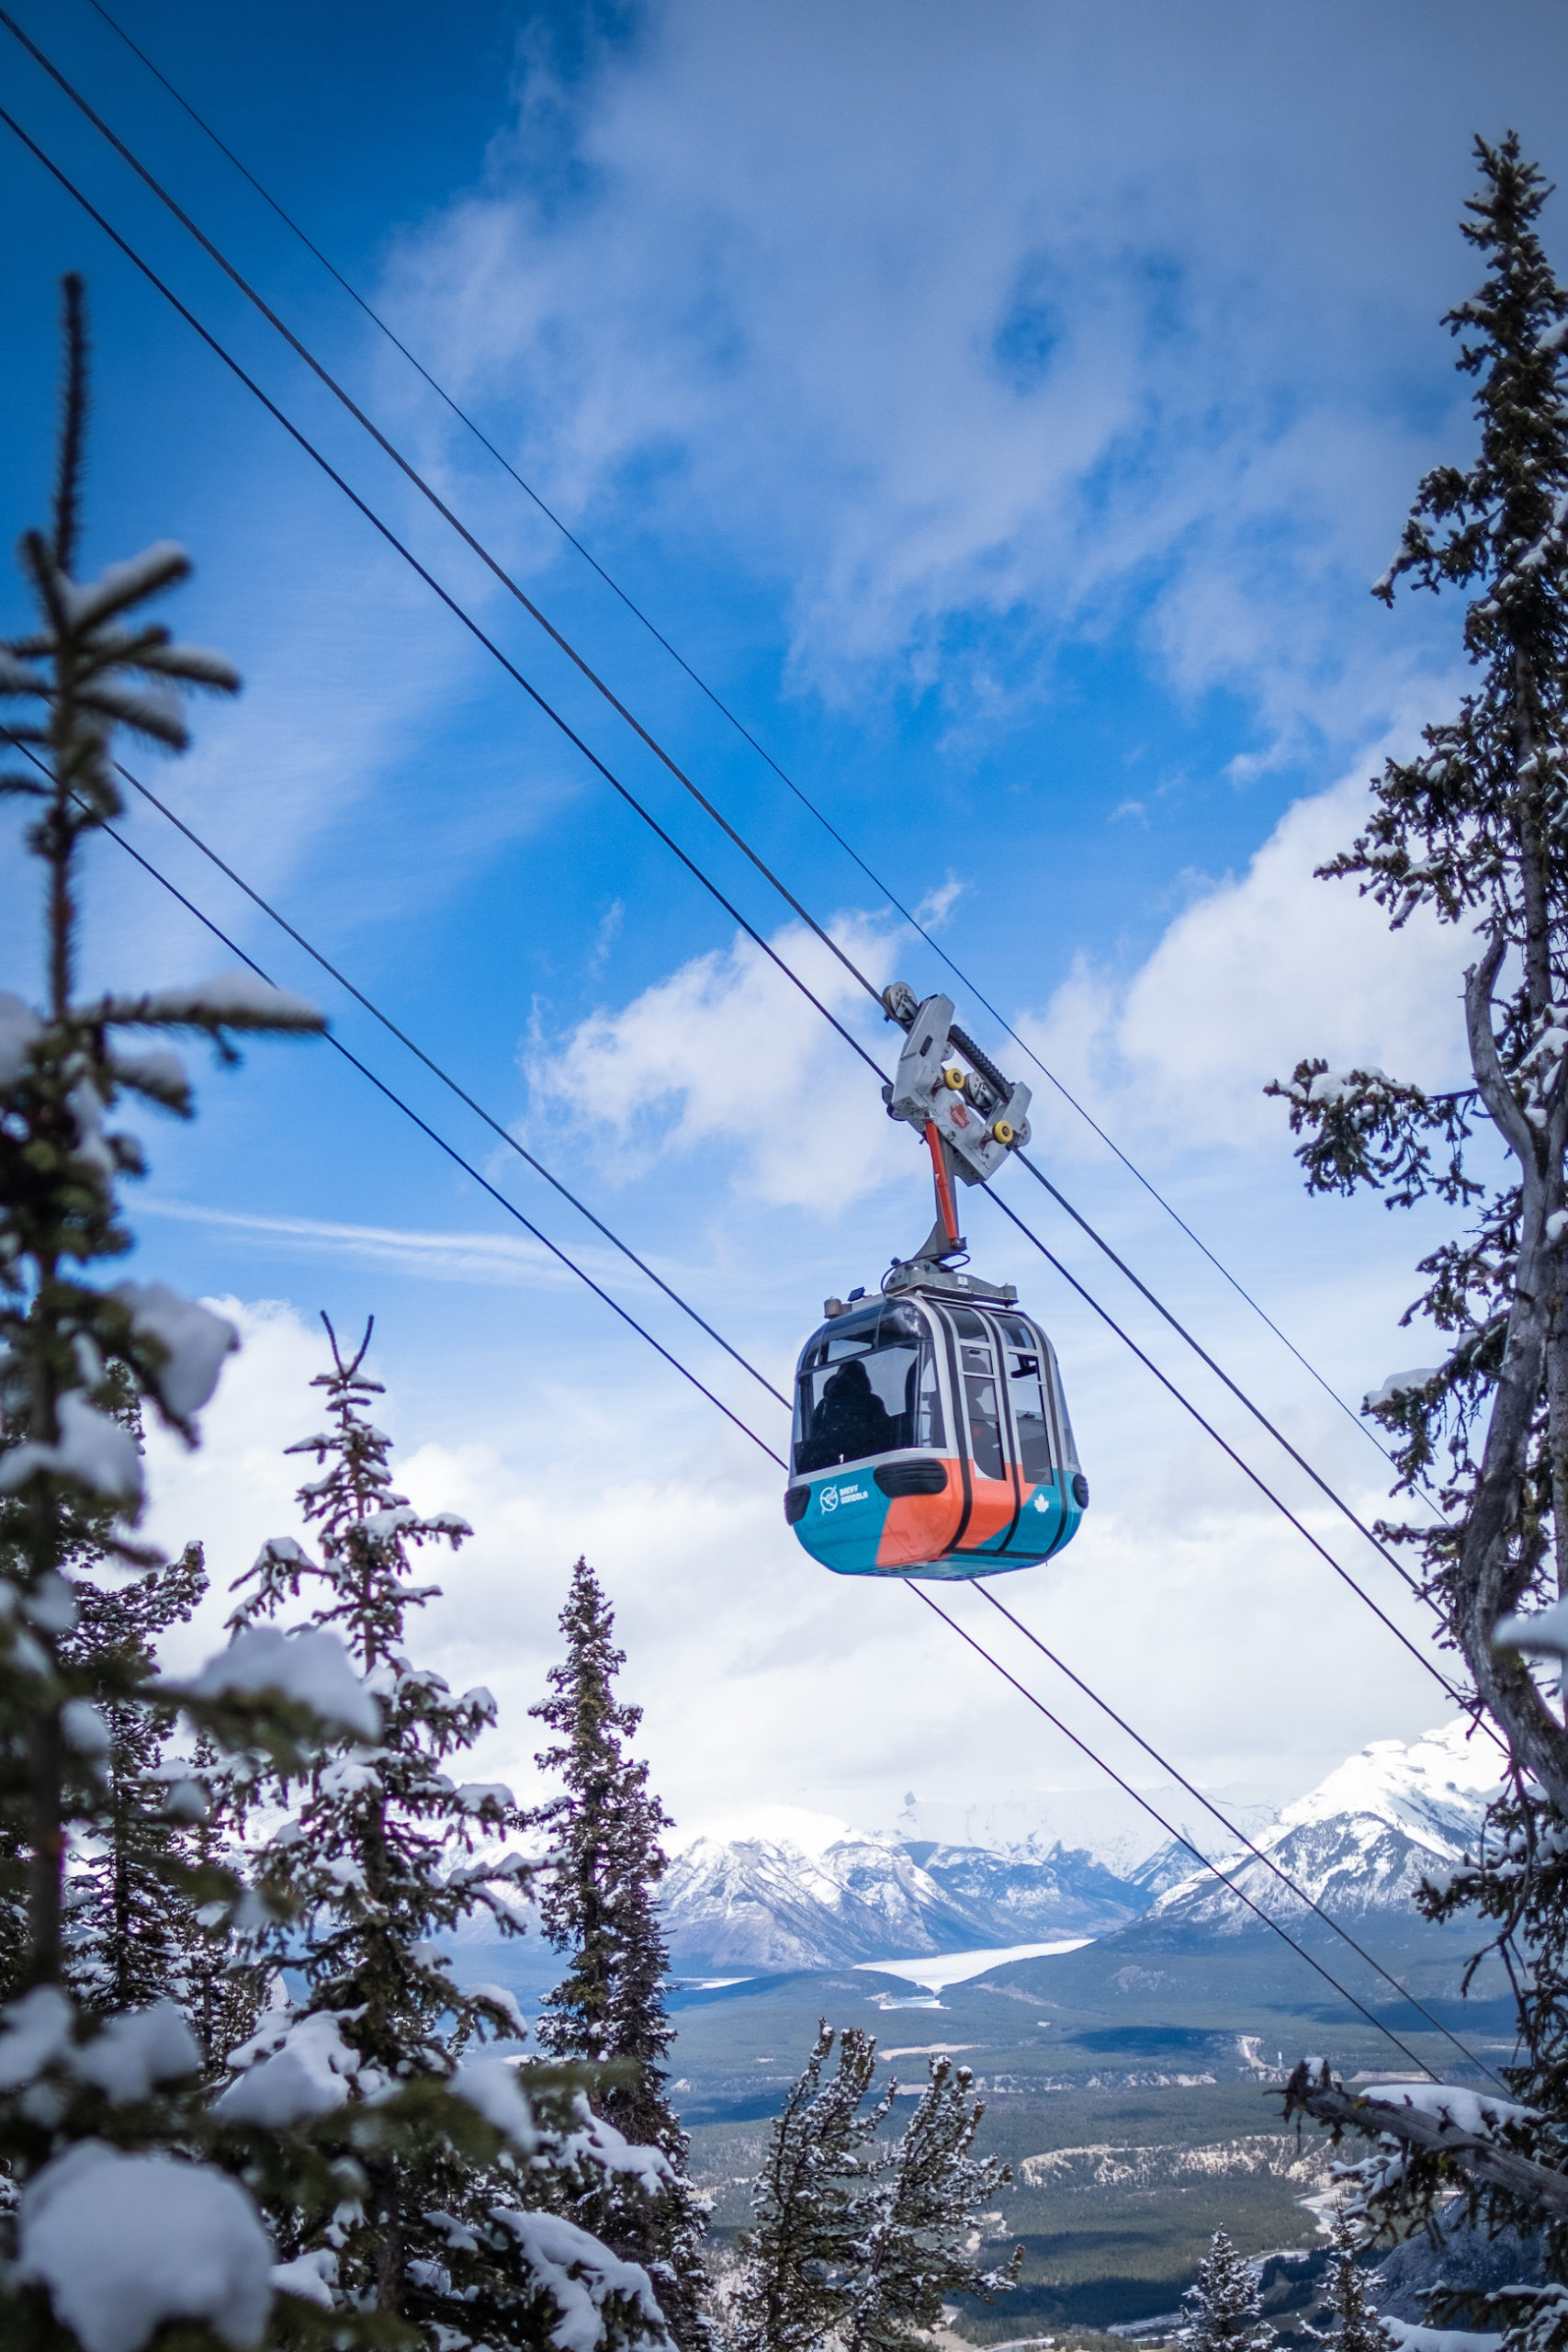 Banff Gondola Ascent in the winter